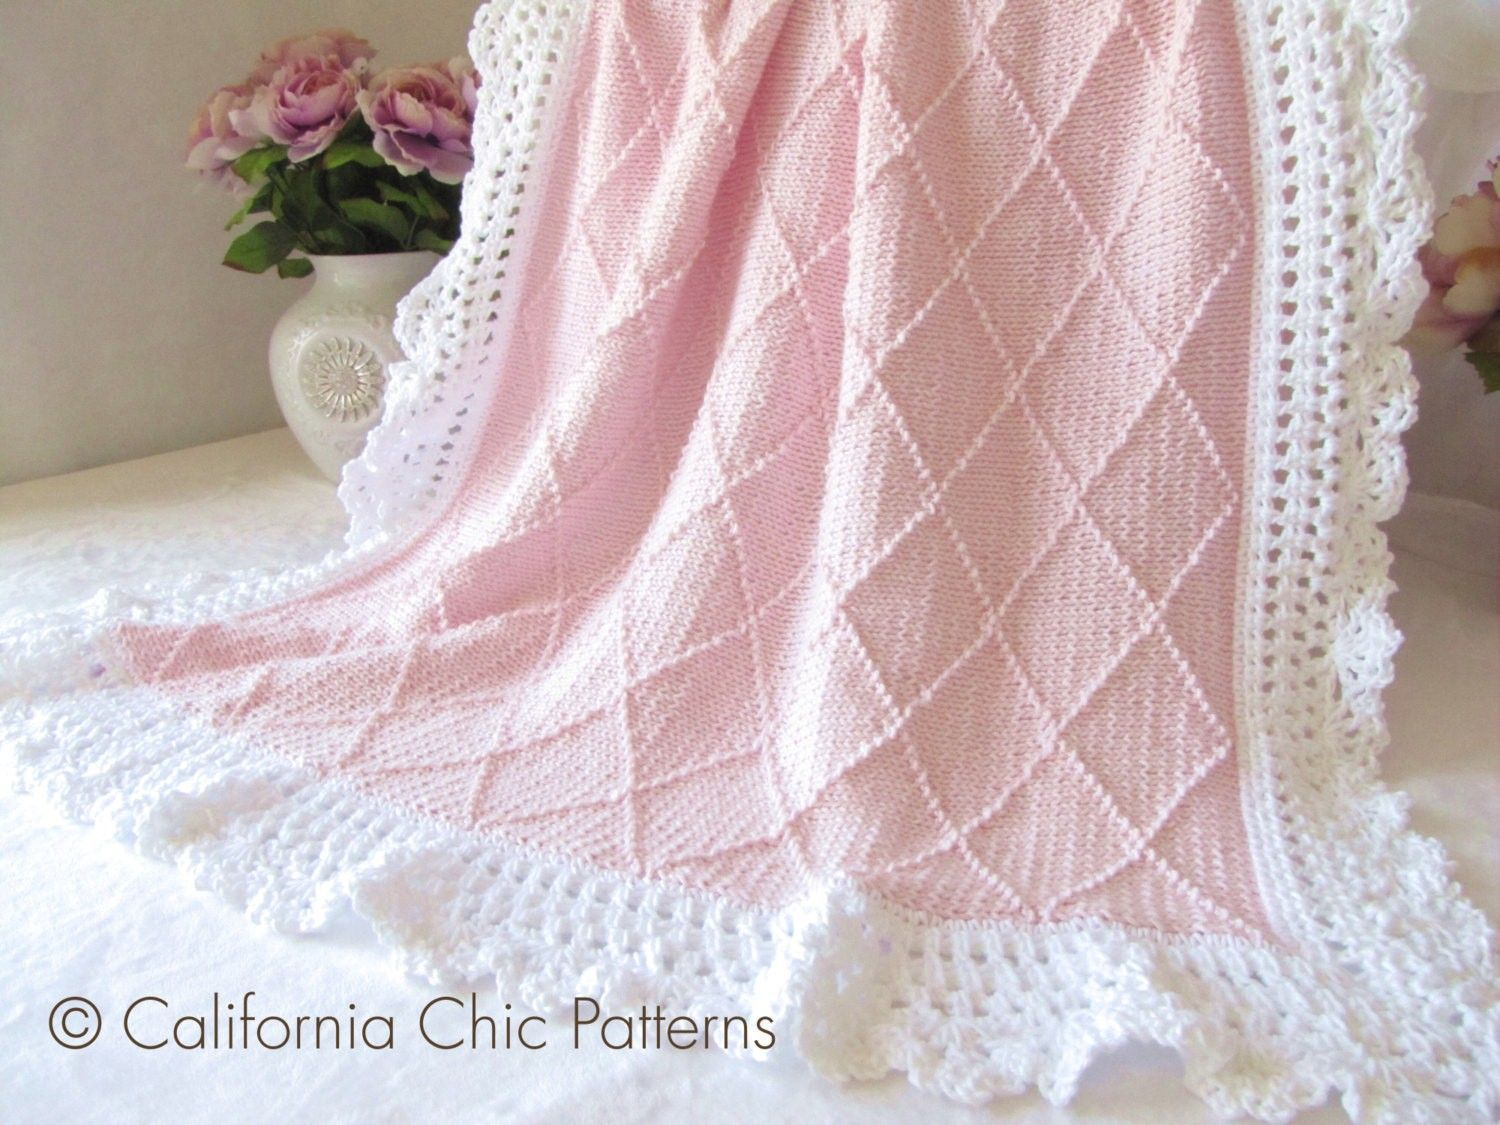 Free Baby Knitting Patterns Pinterest Free Knitting Patterns For Ba Blankets Pinterest My Heart Blanket